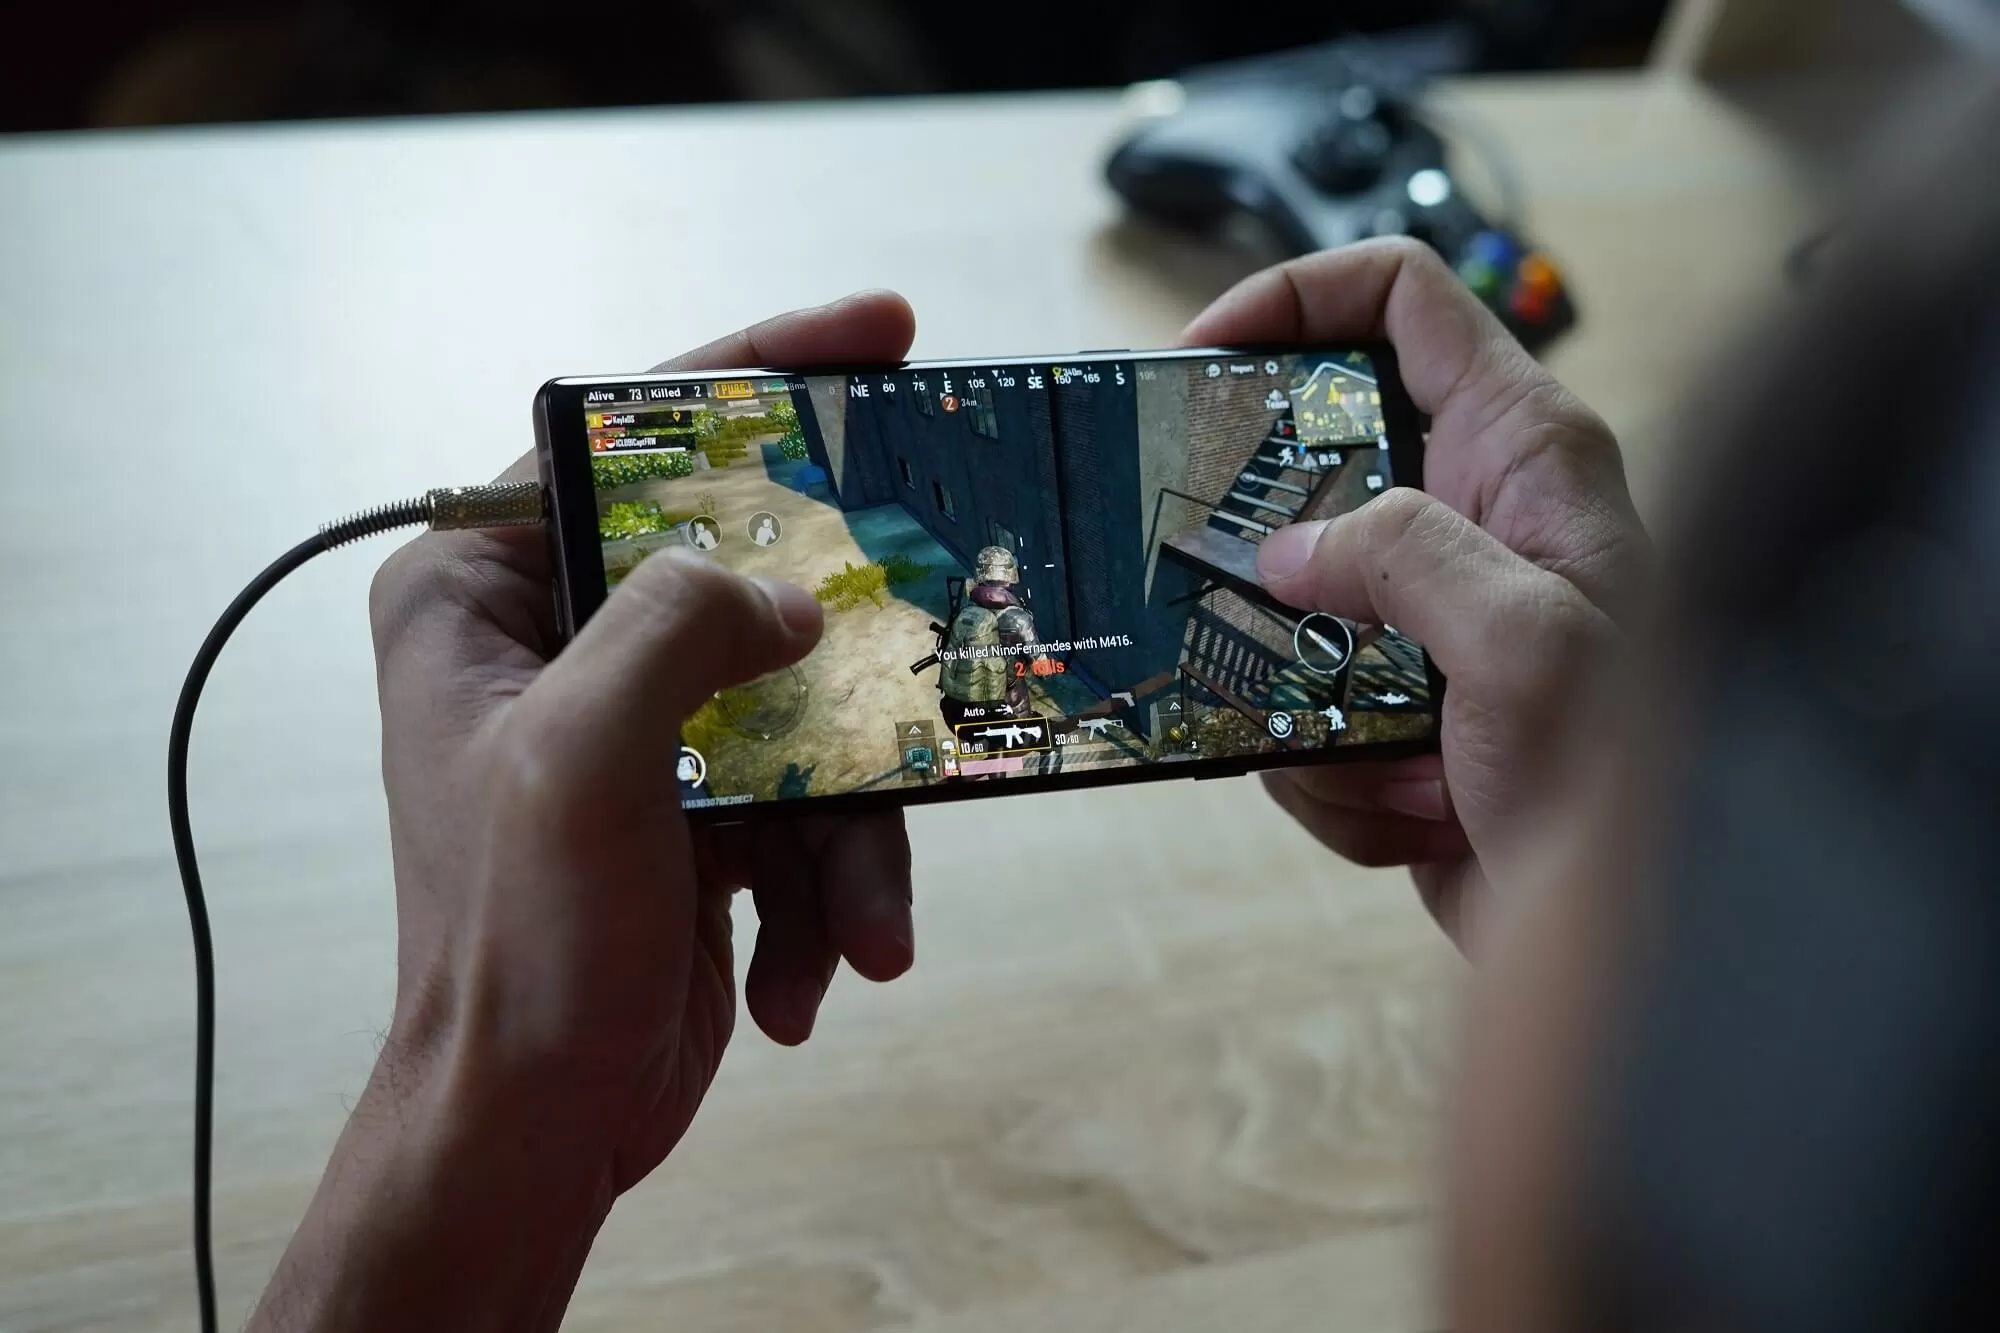 AMD's Radeon tech set to appear inside Samsung Galaxy phones in 2021